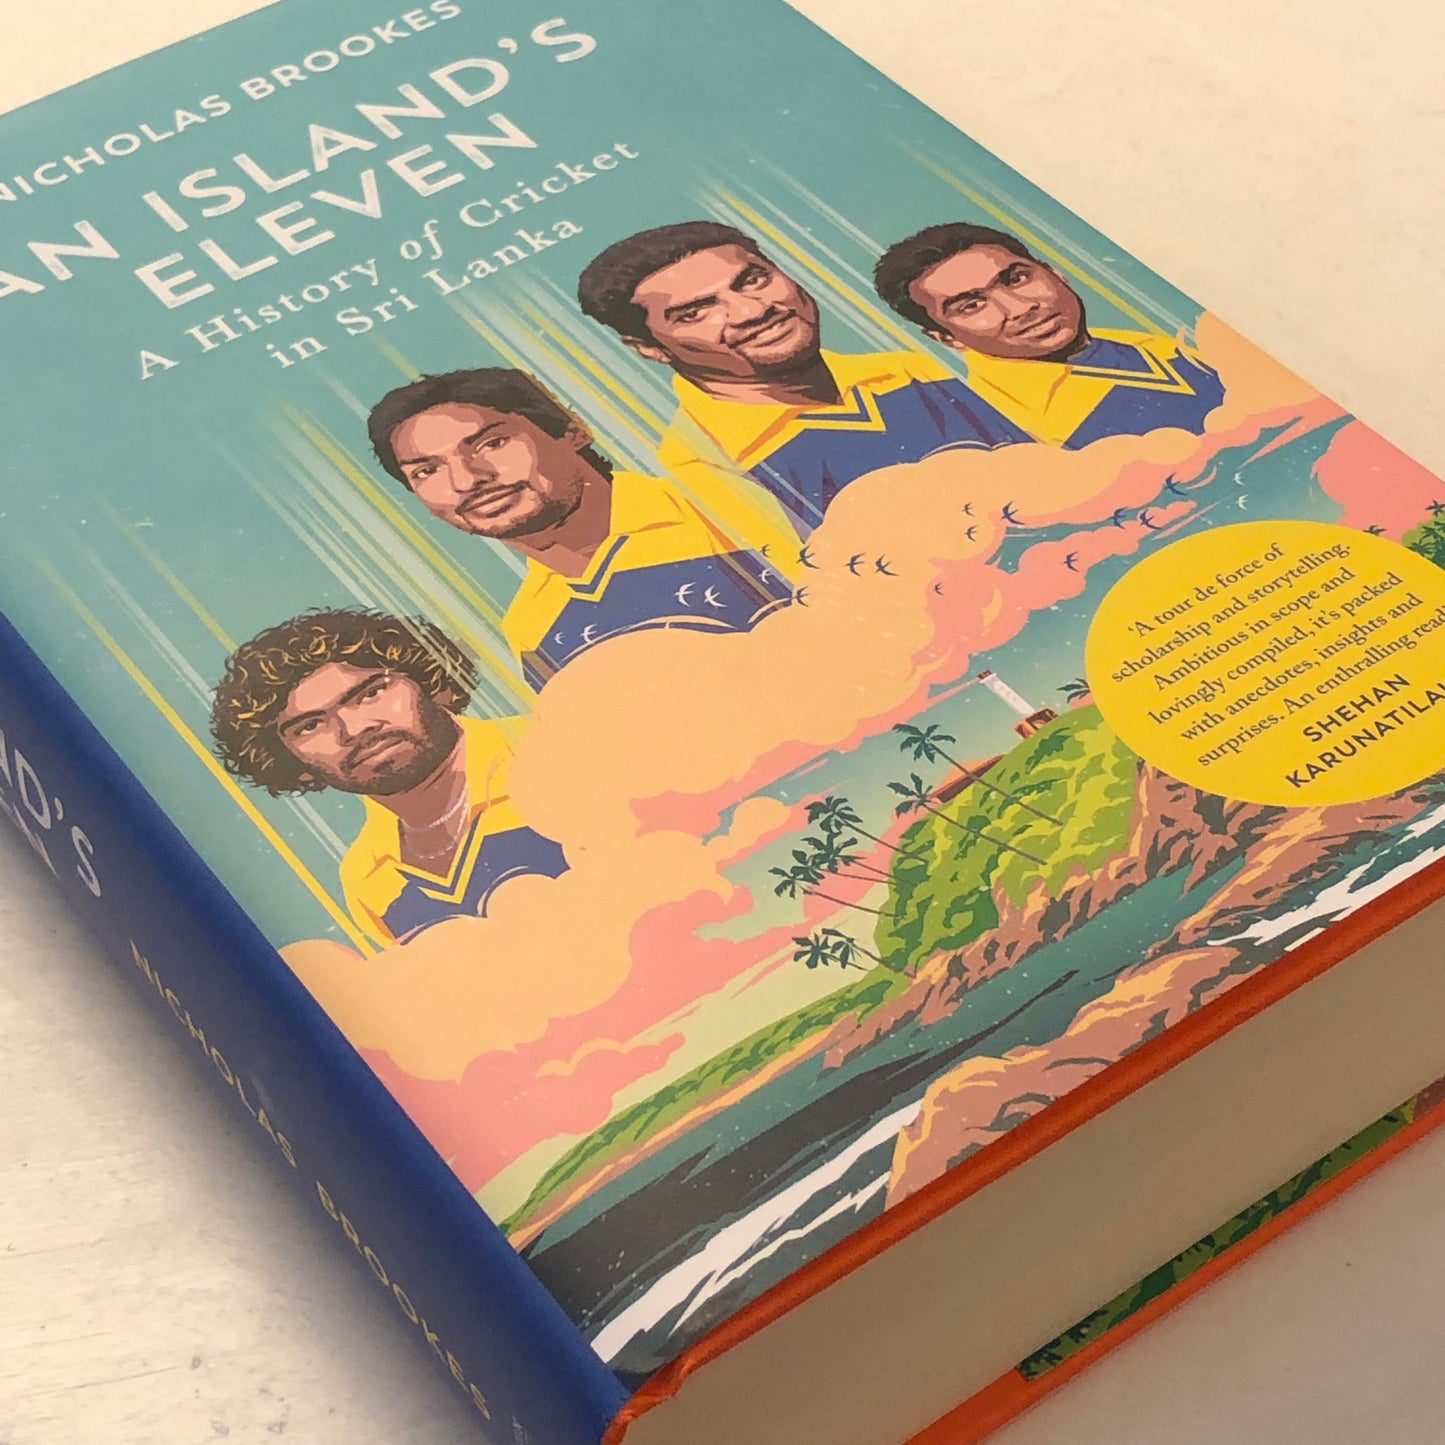 Island's Eleven: A History of Cricket in Sri Lanka by Nicholas Brookes